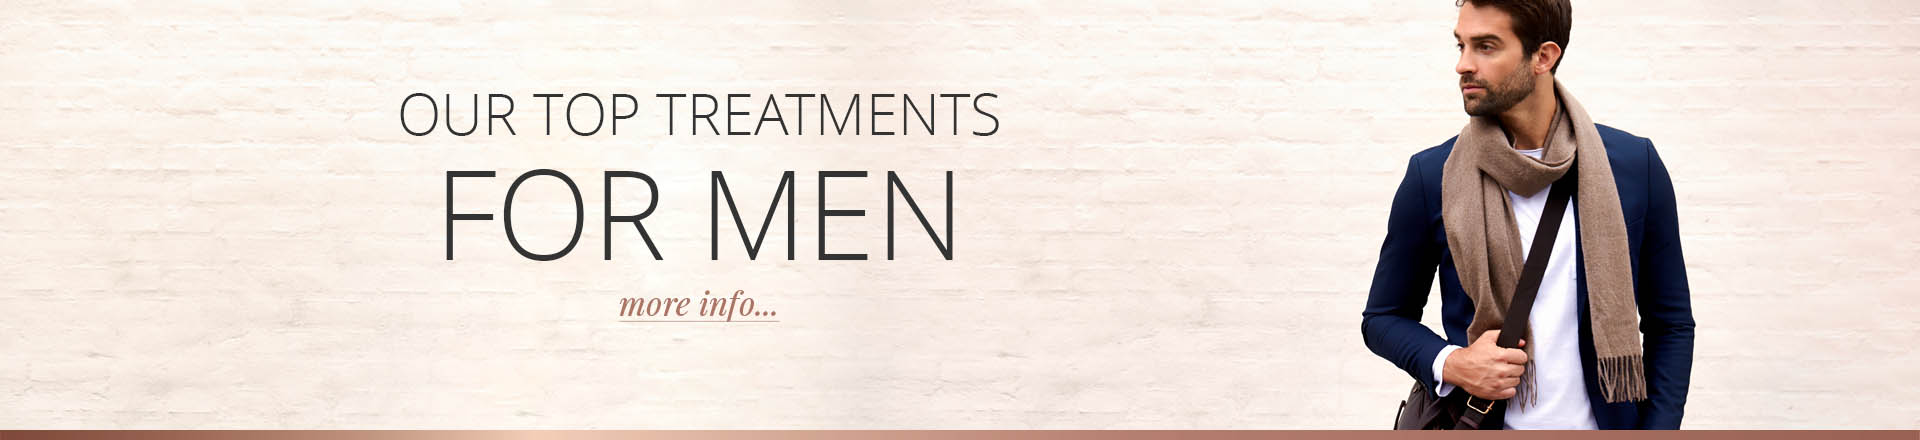 MedSpa treatments for men